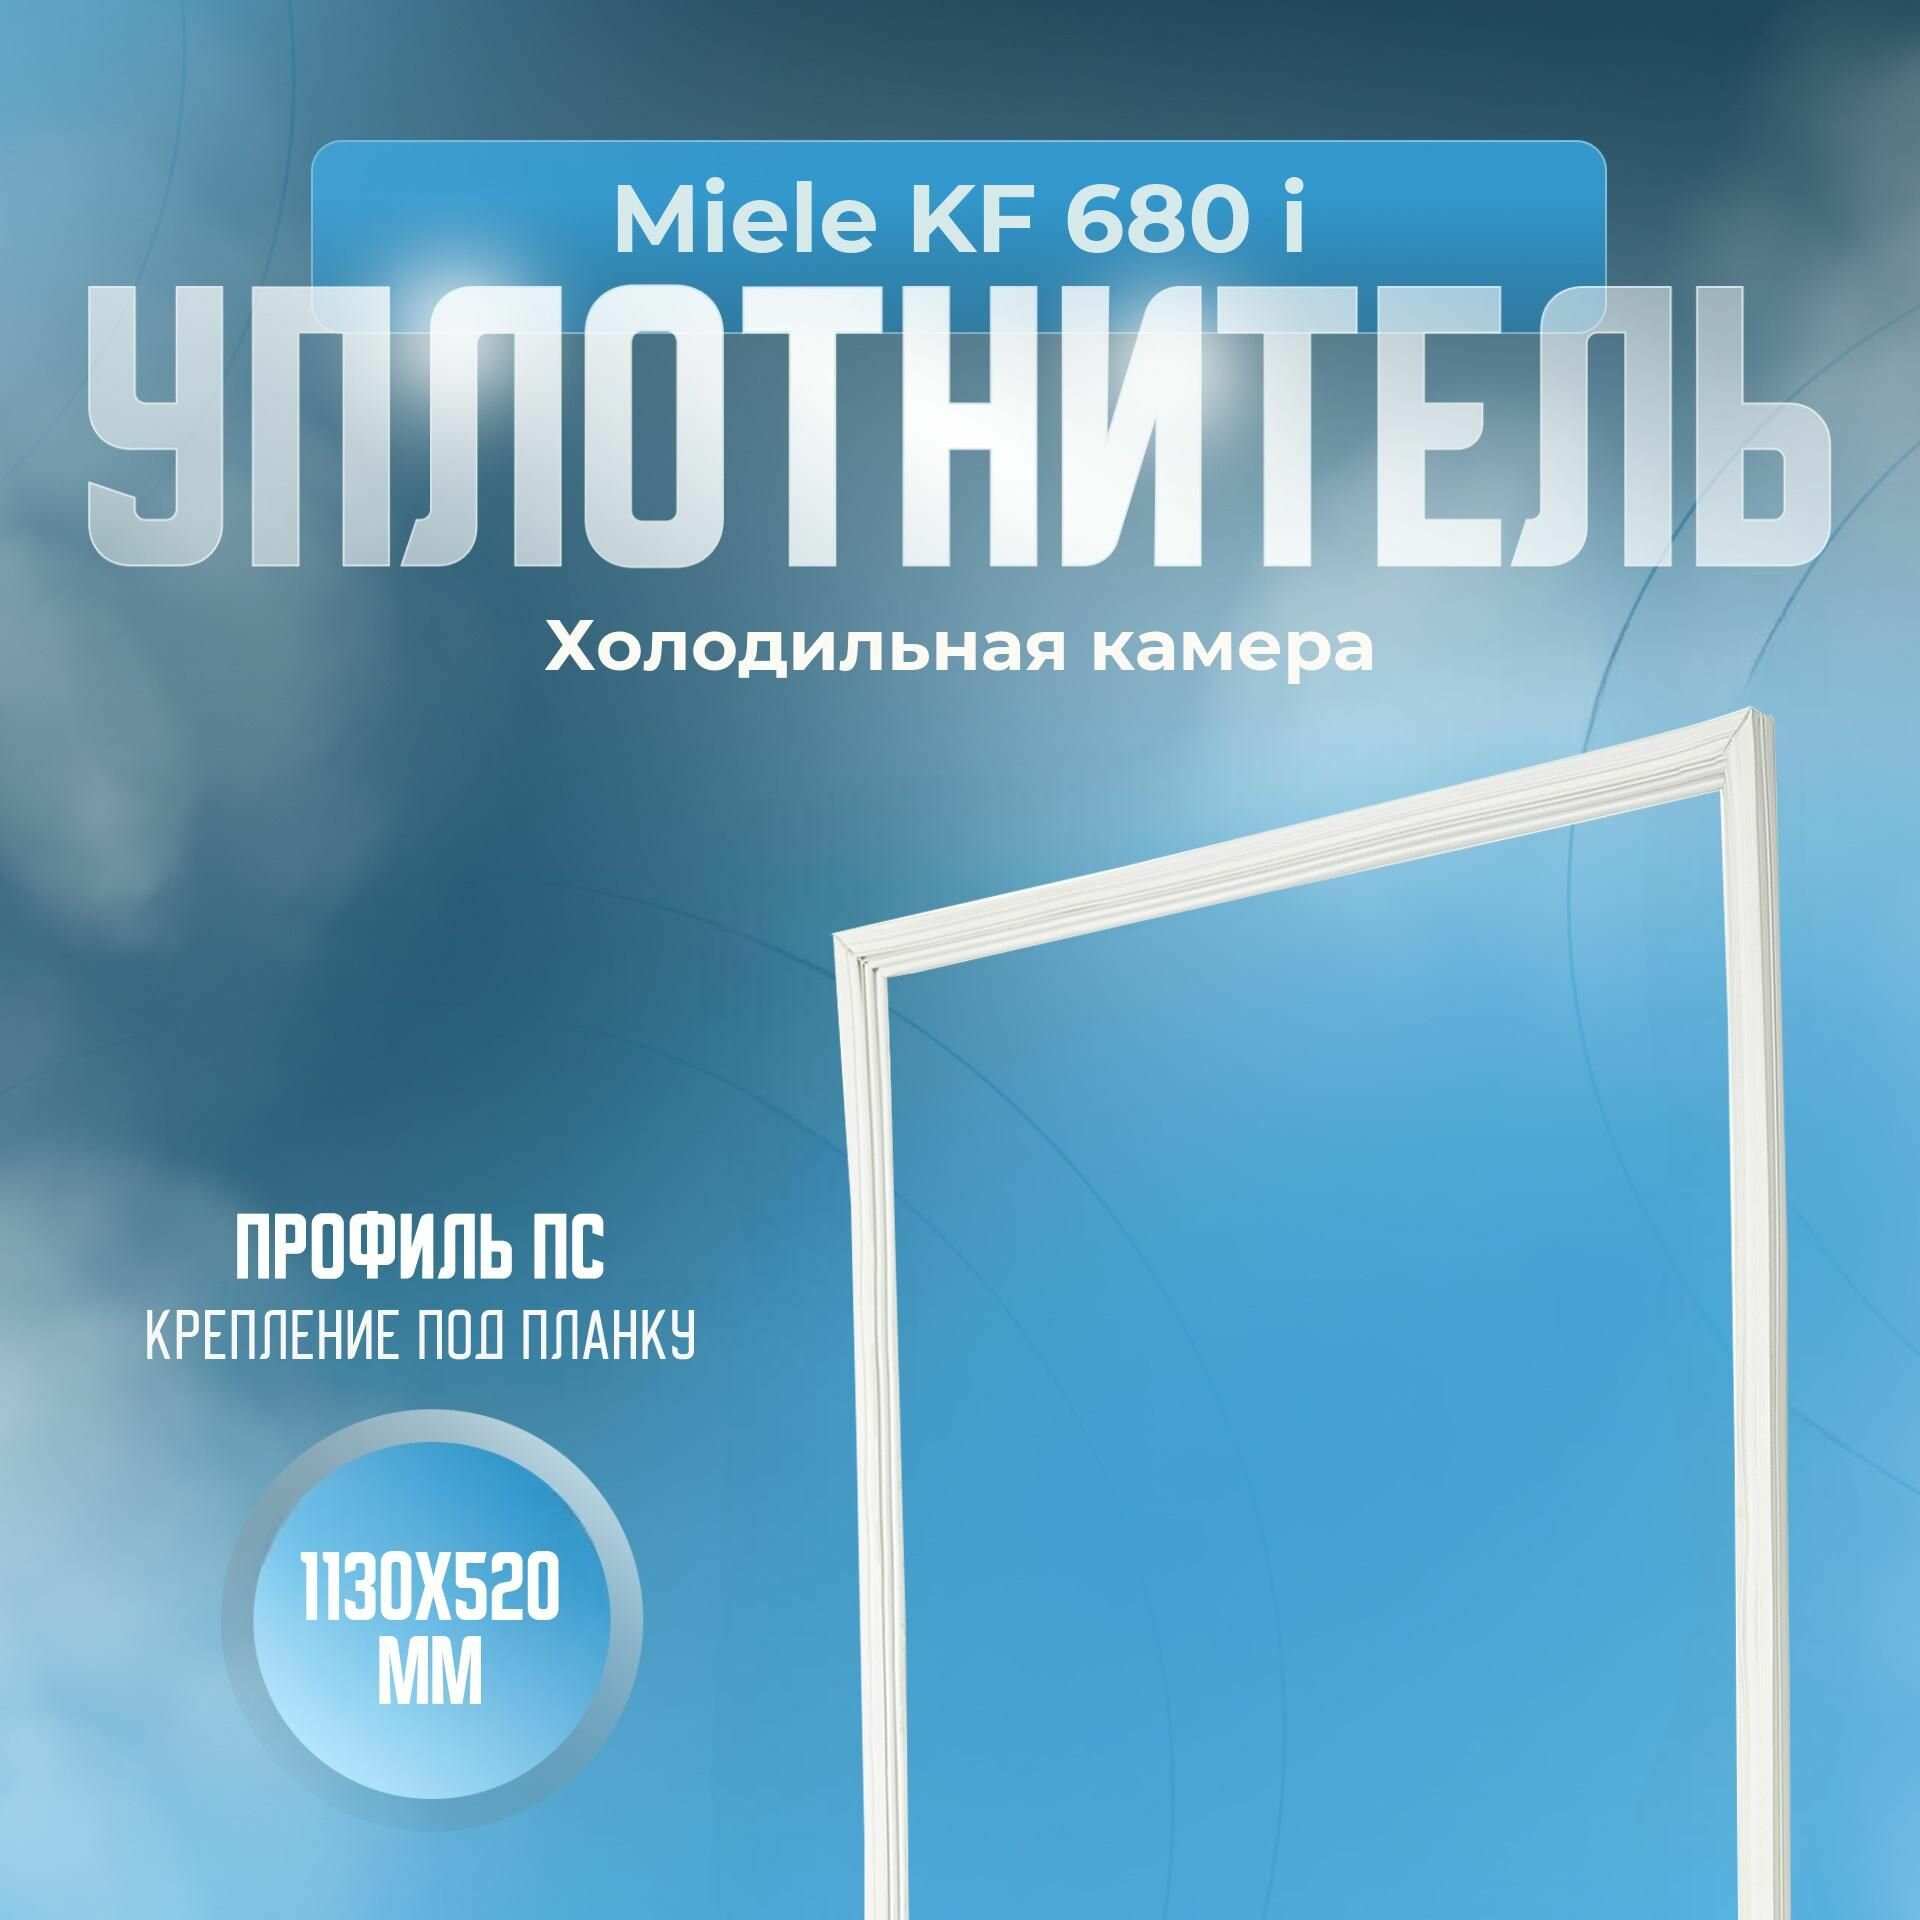 Уплотнитель Miele KF 680 i. (Холодильная камера) Размер - 515х520 мм. ПС